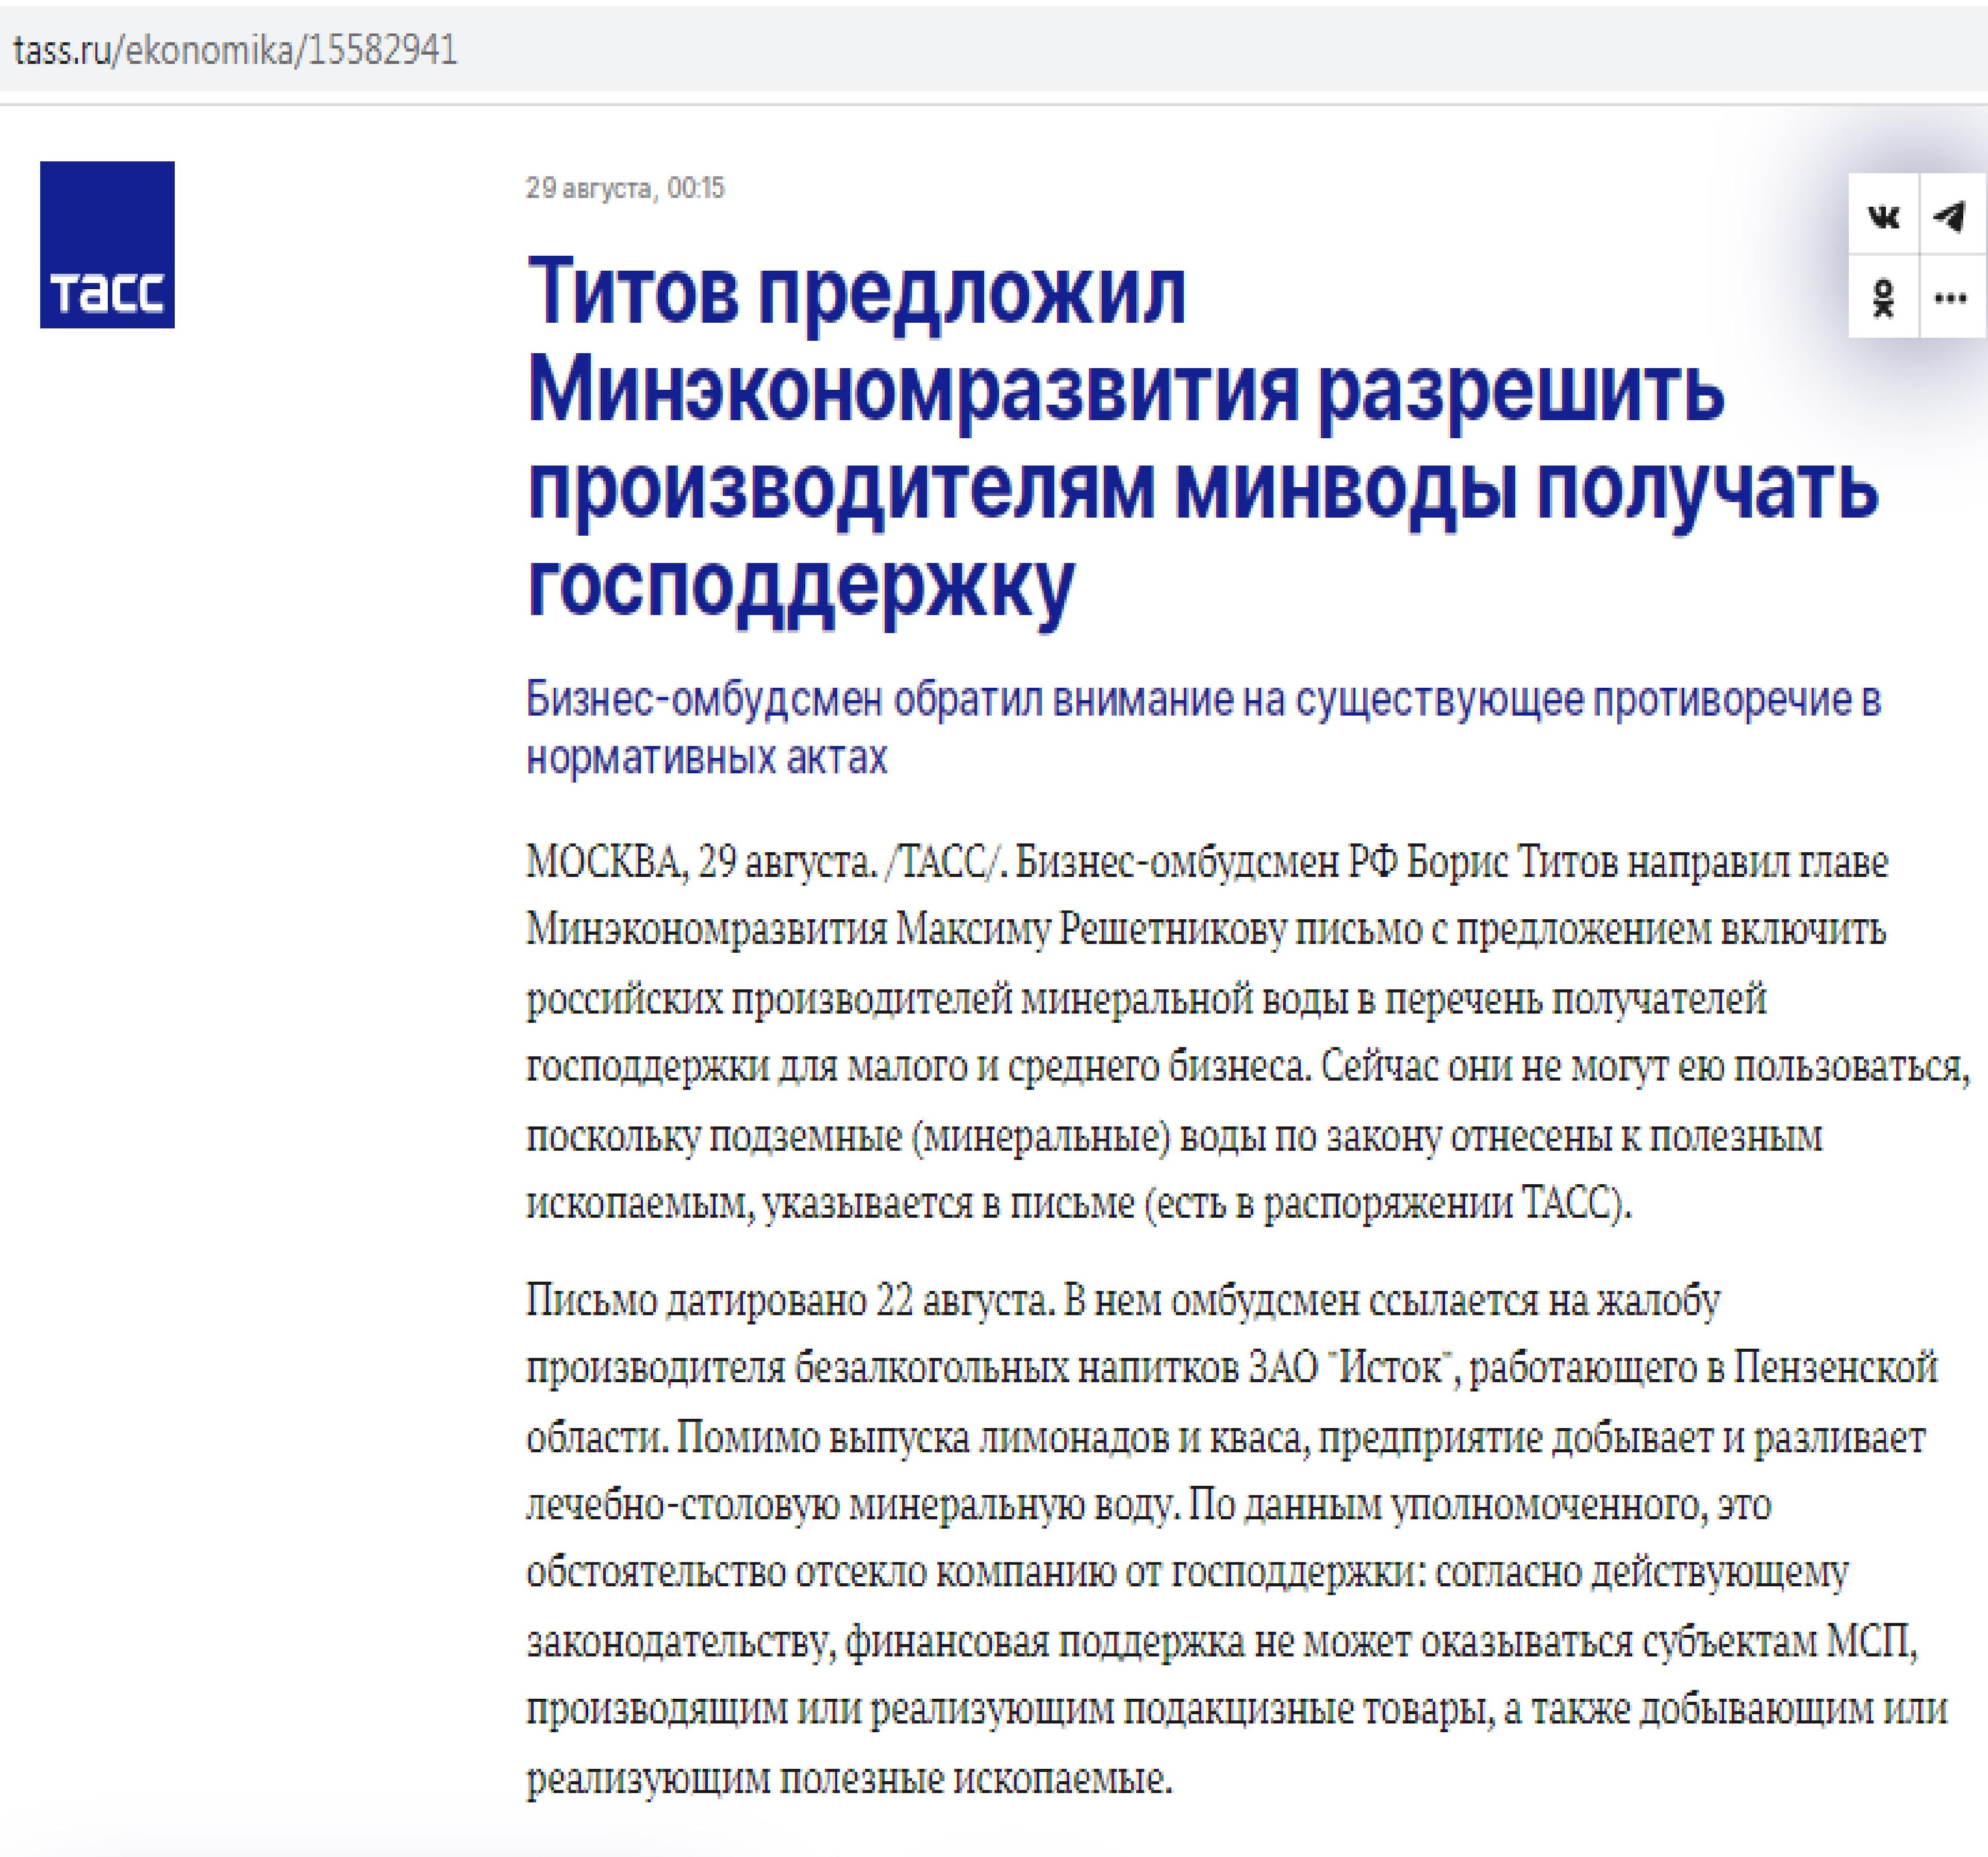 Business ombudsmen Titov to support Istok